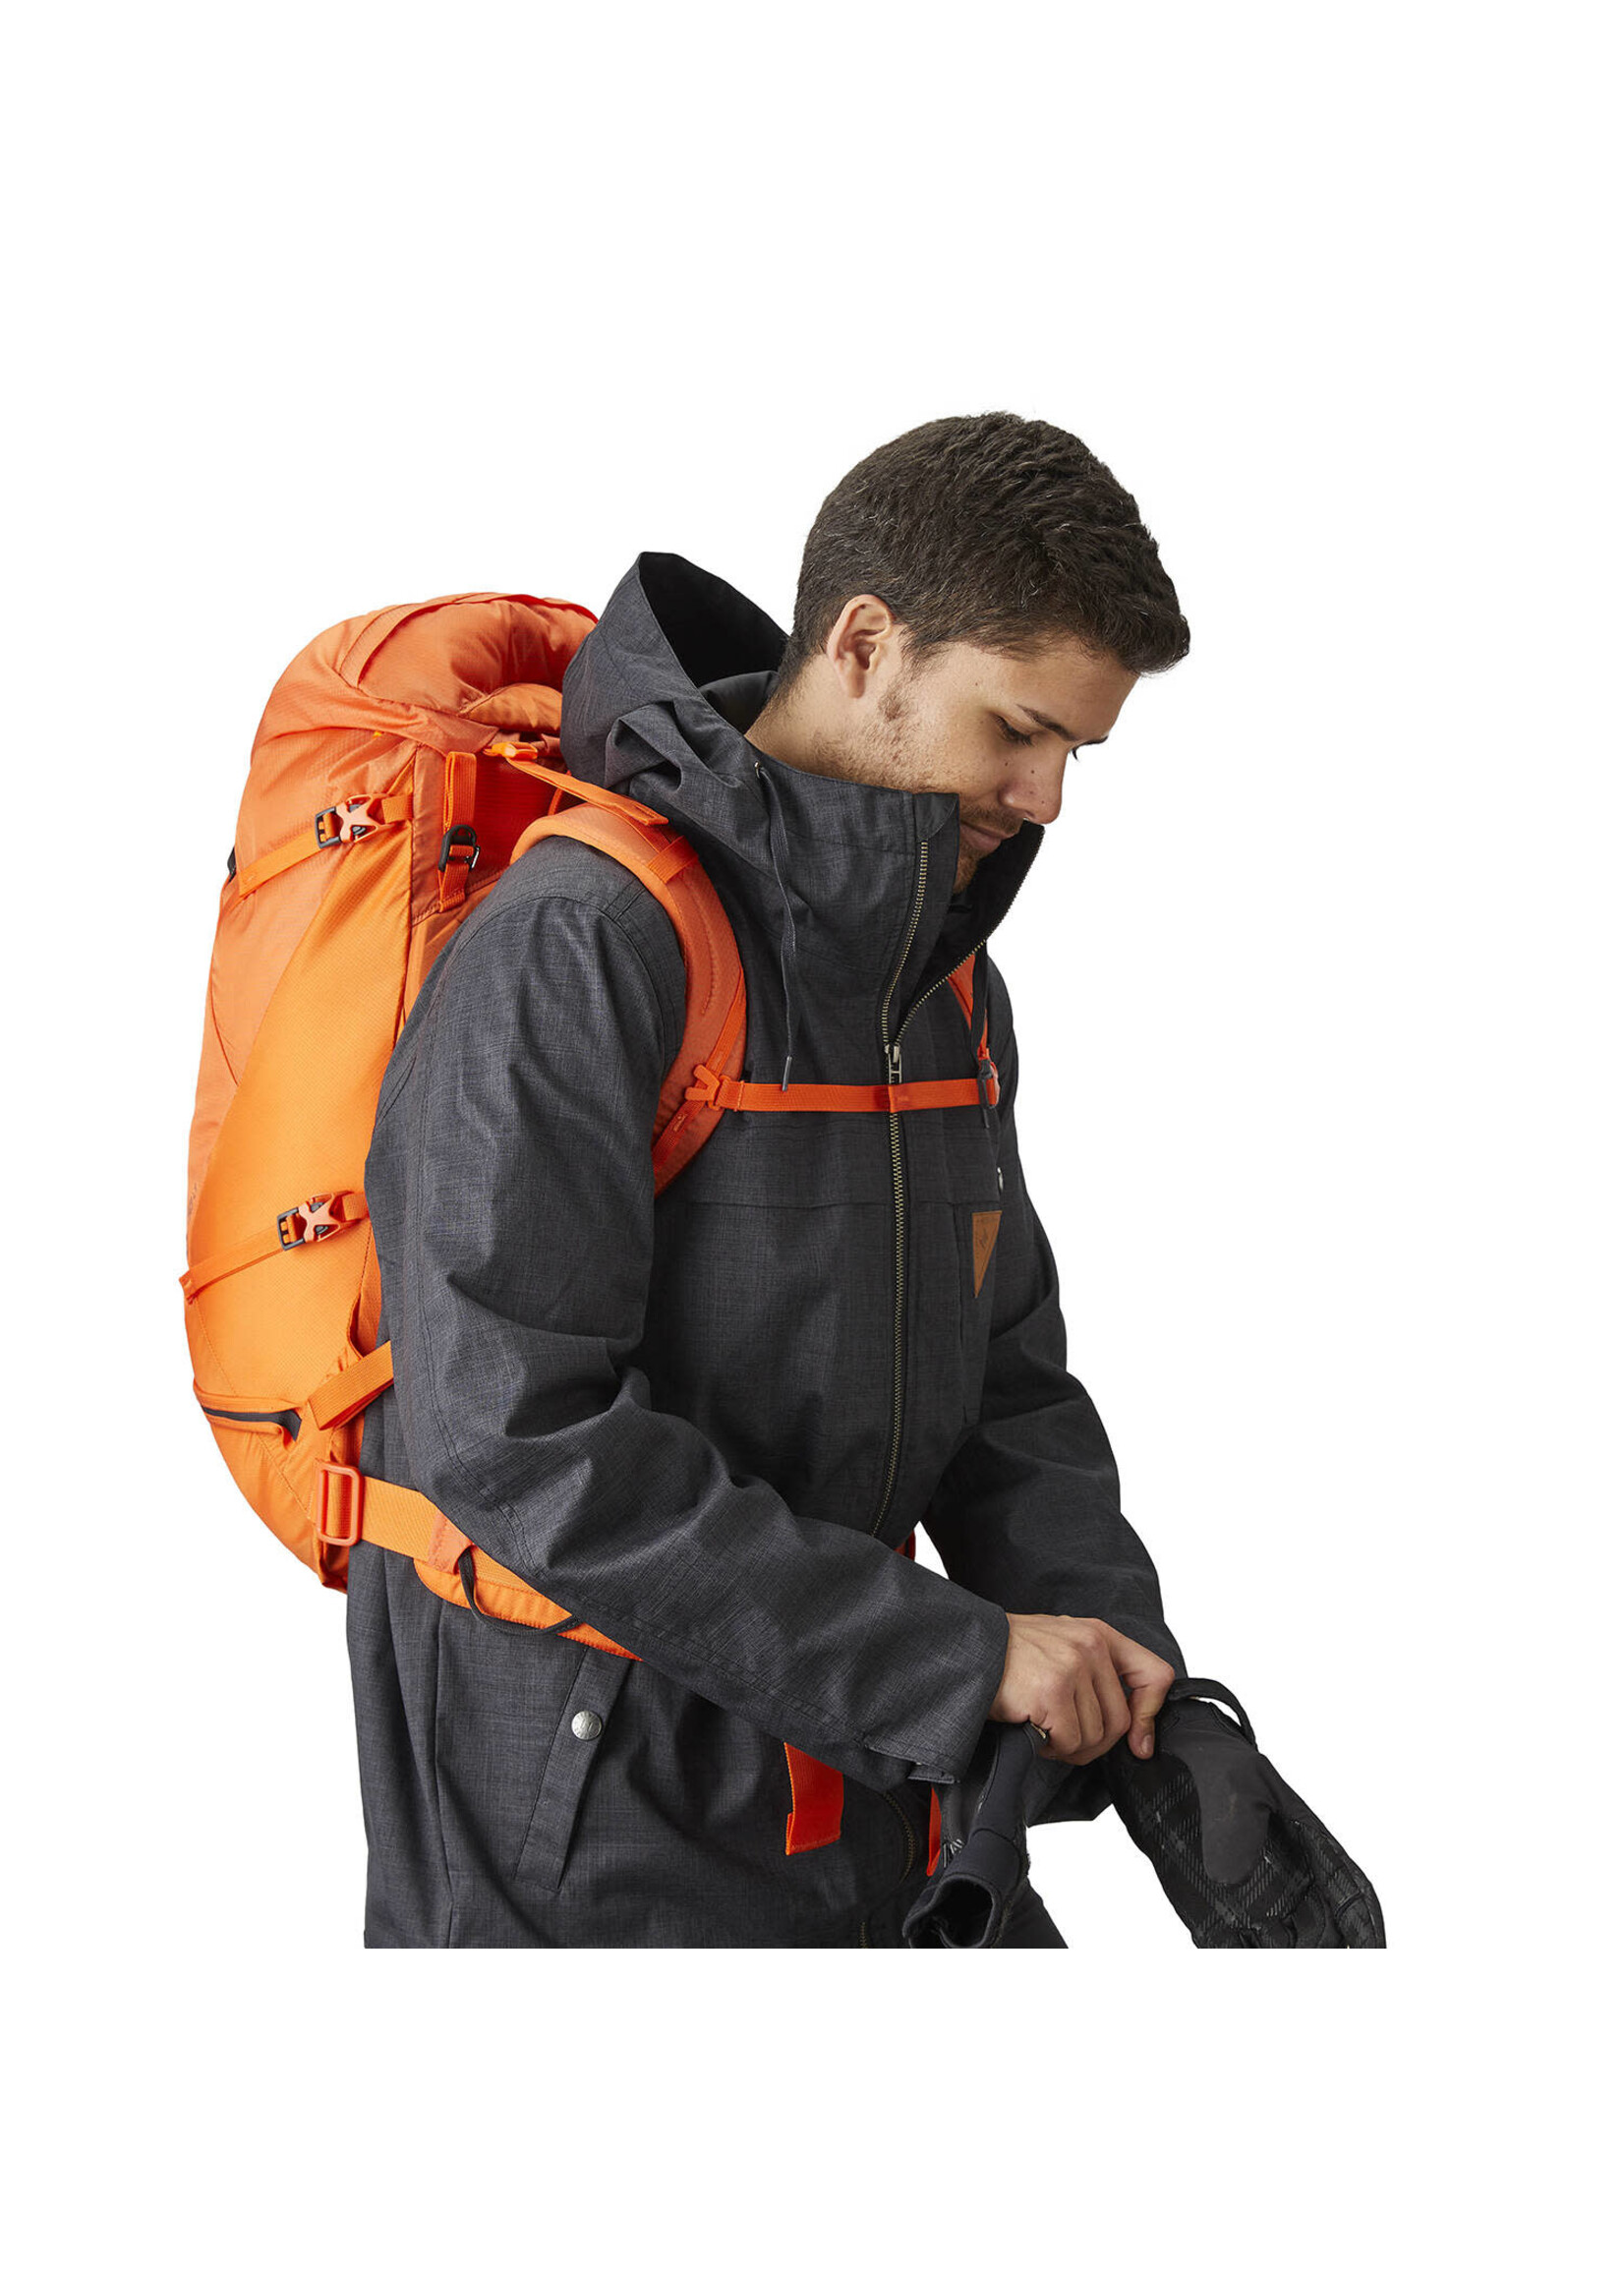 Gregory Gregory Alpinisto 38 LT Backpack - Unisex